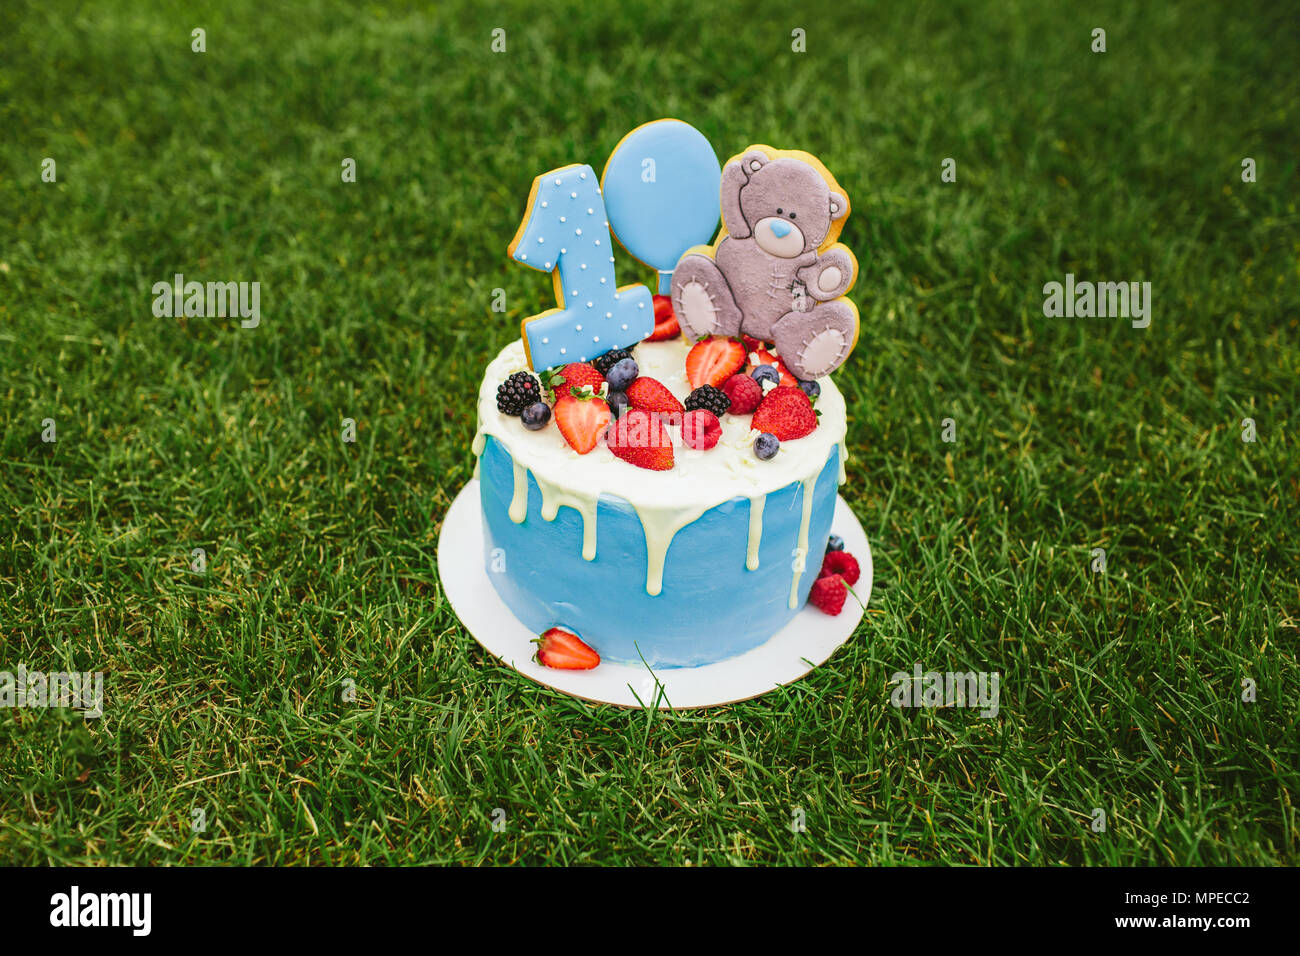 One Year Old Birthday Cake Stock Photo